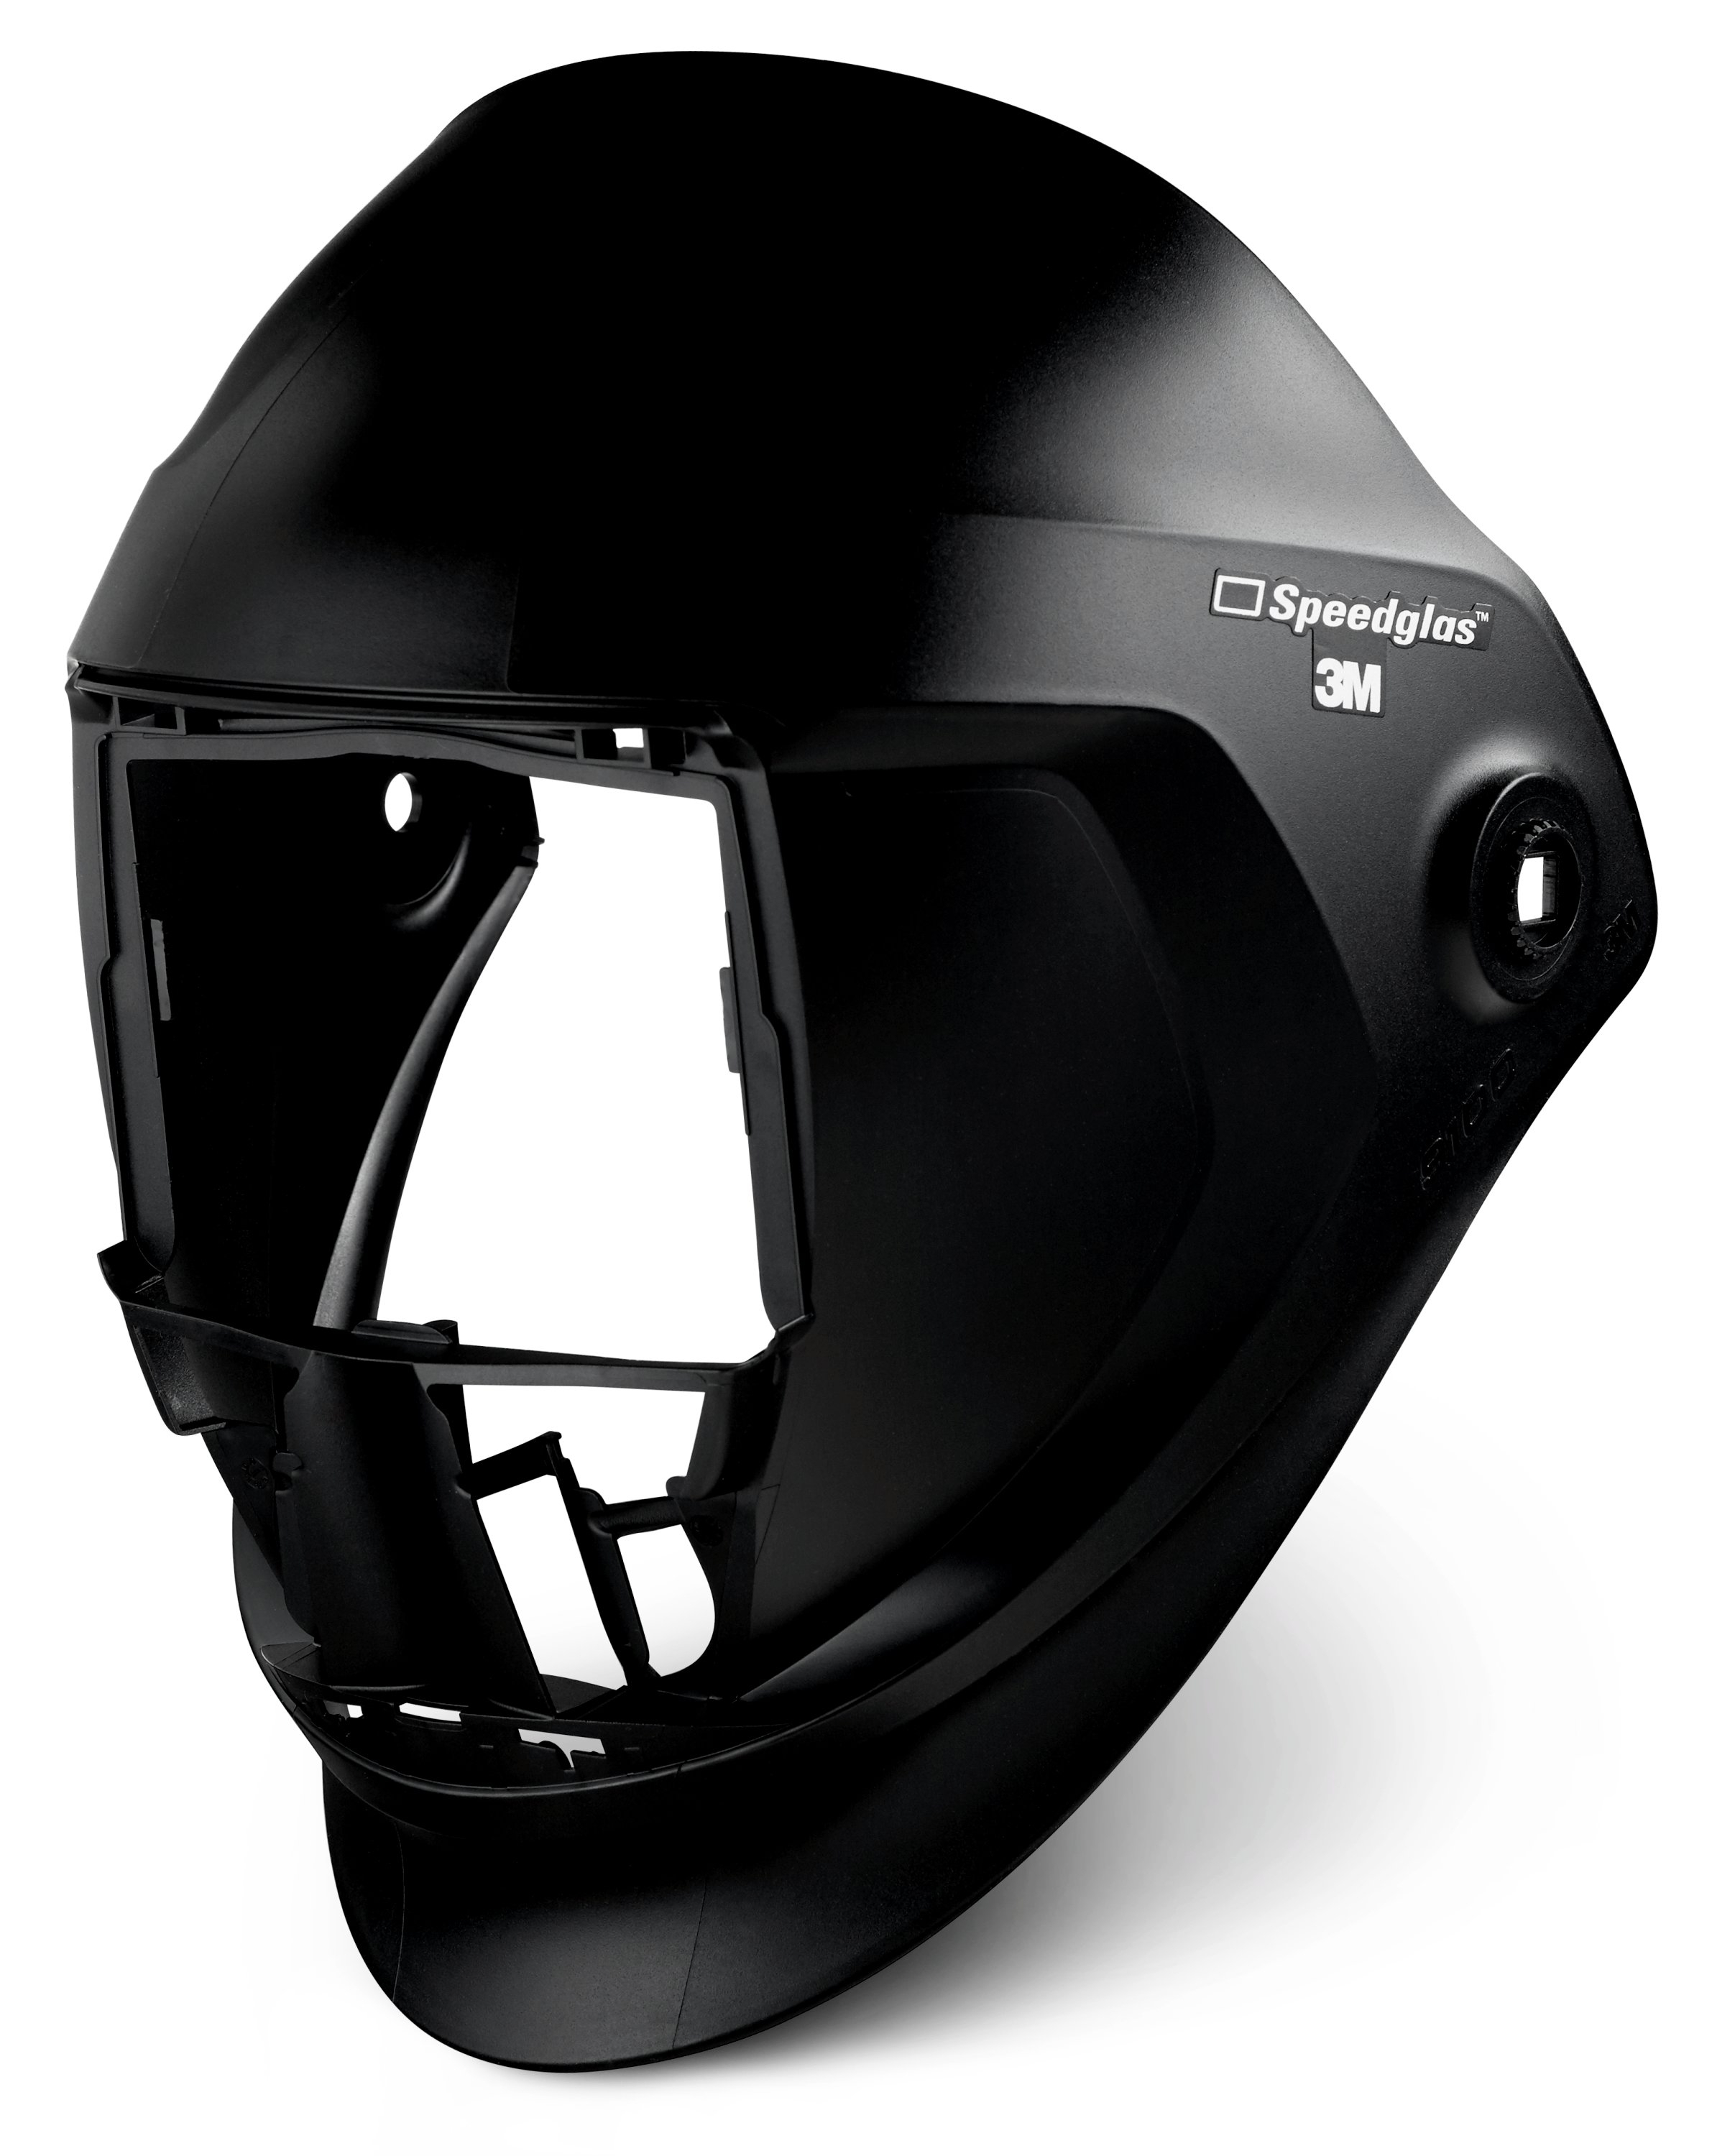 Masque de soudure 3M Speedglas G5-03 Pro, coque de rechange avec façade, 631895